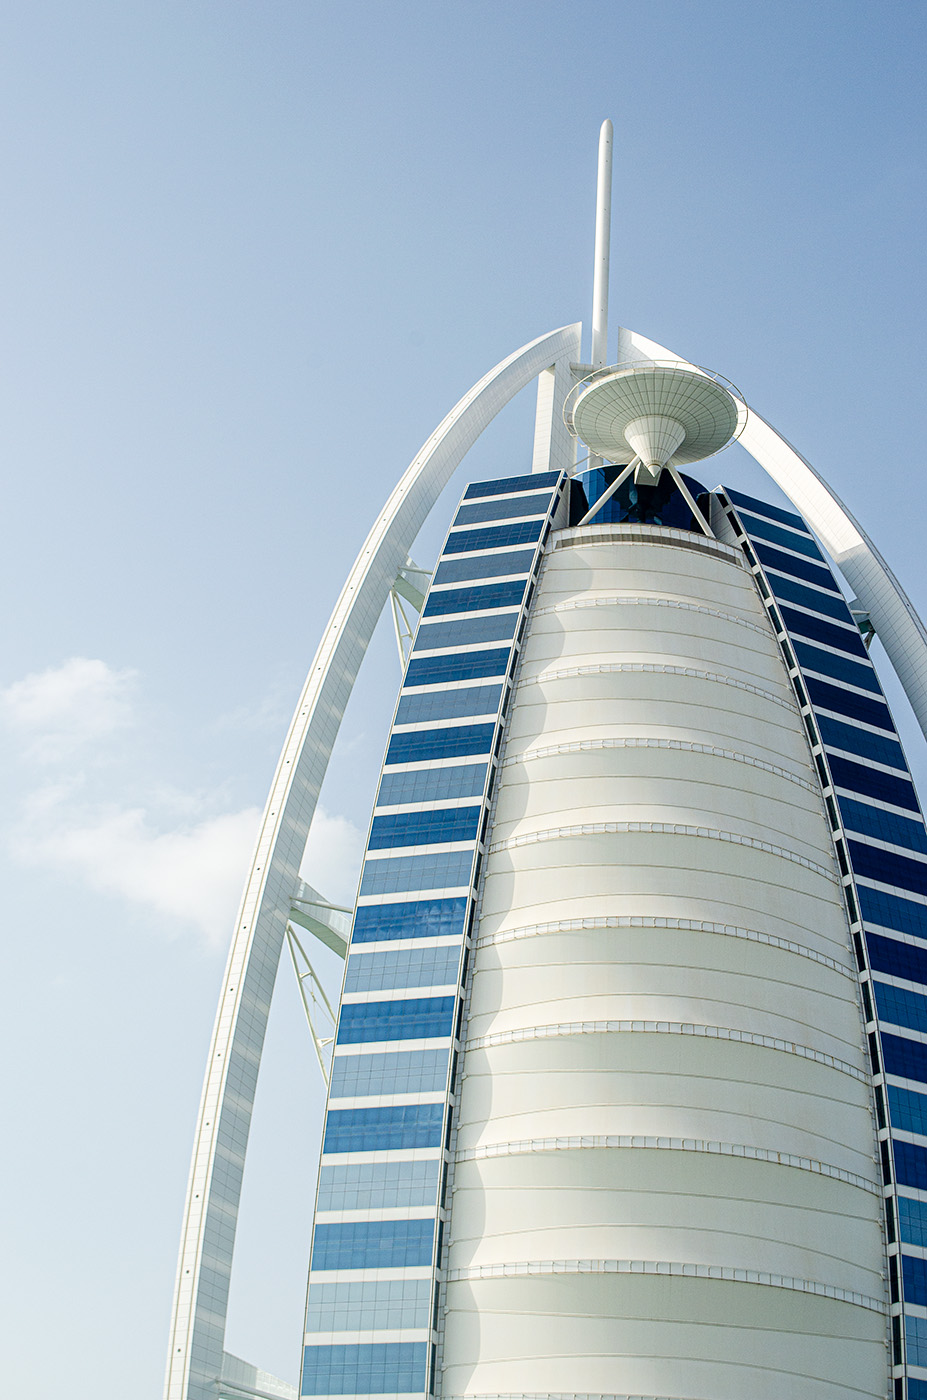 The sail of the Burj Al Arab